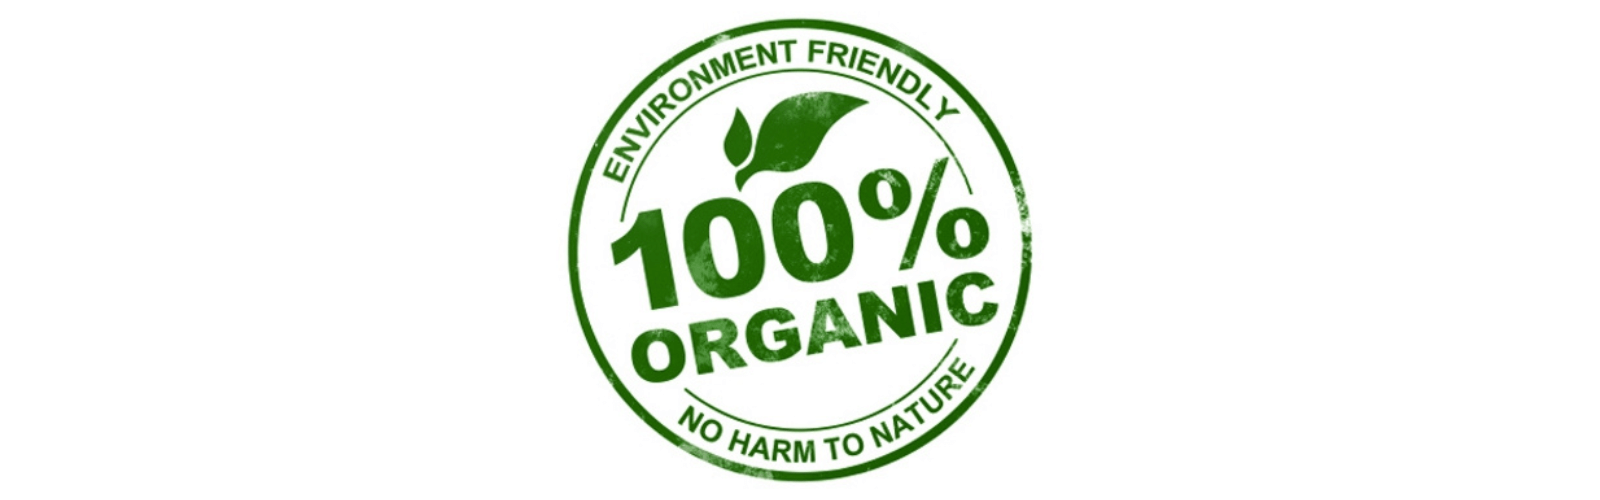 Chemical vs. Organic Fertilizers For Marijuana -